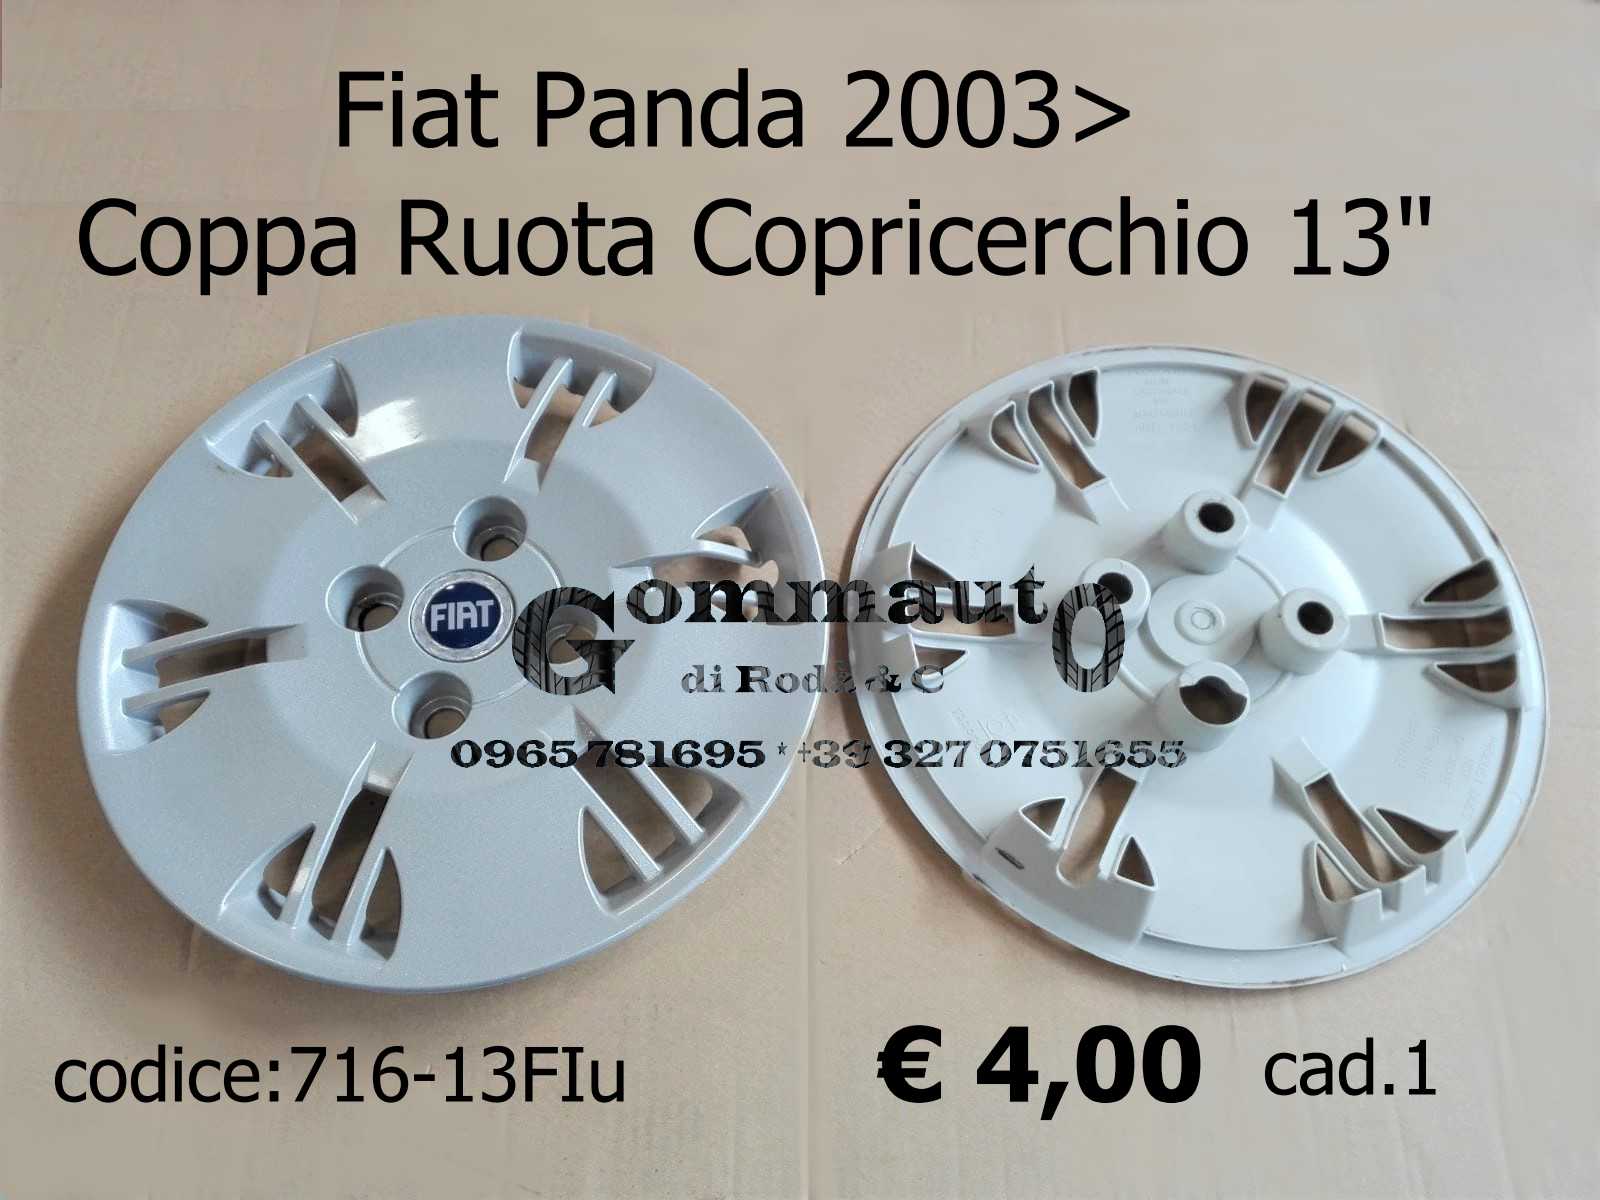 Coppa Ruota FIAT Panda 03, Vendita coppa ruota fiat panda Coppe ruota